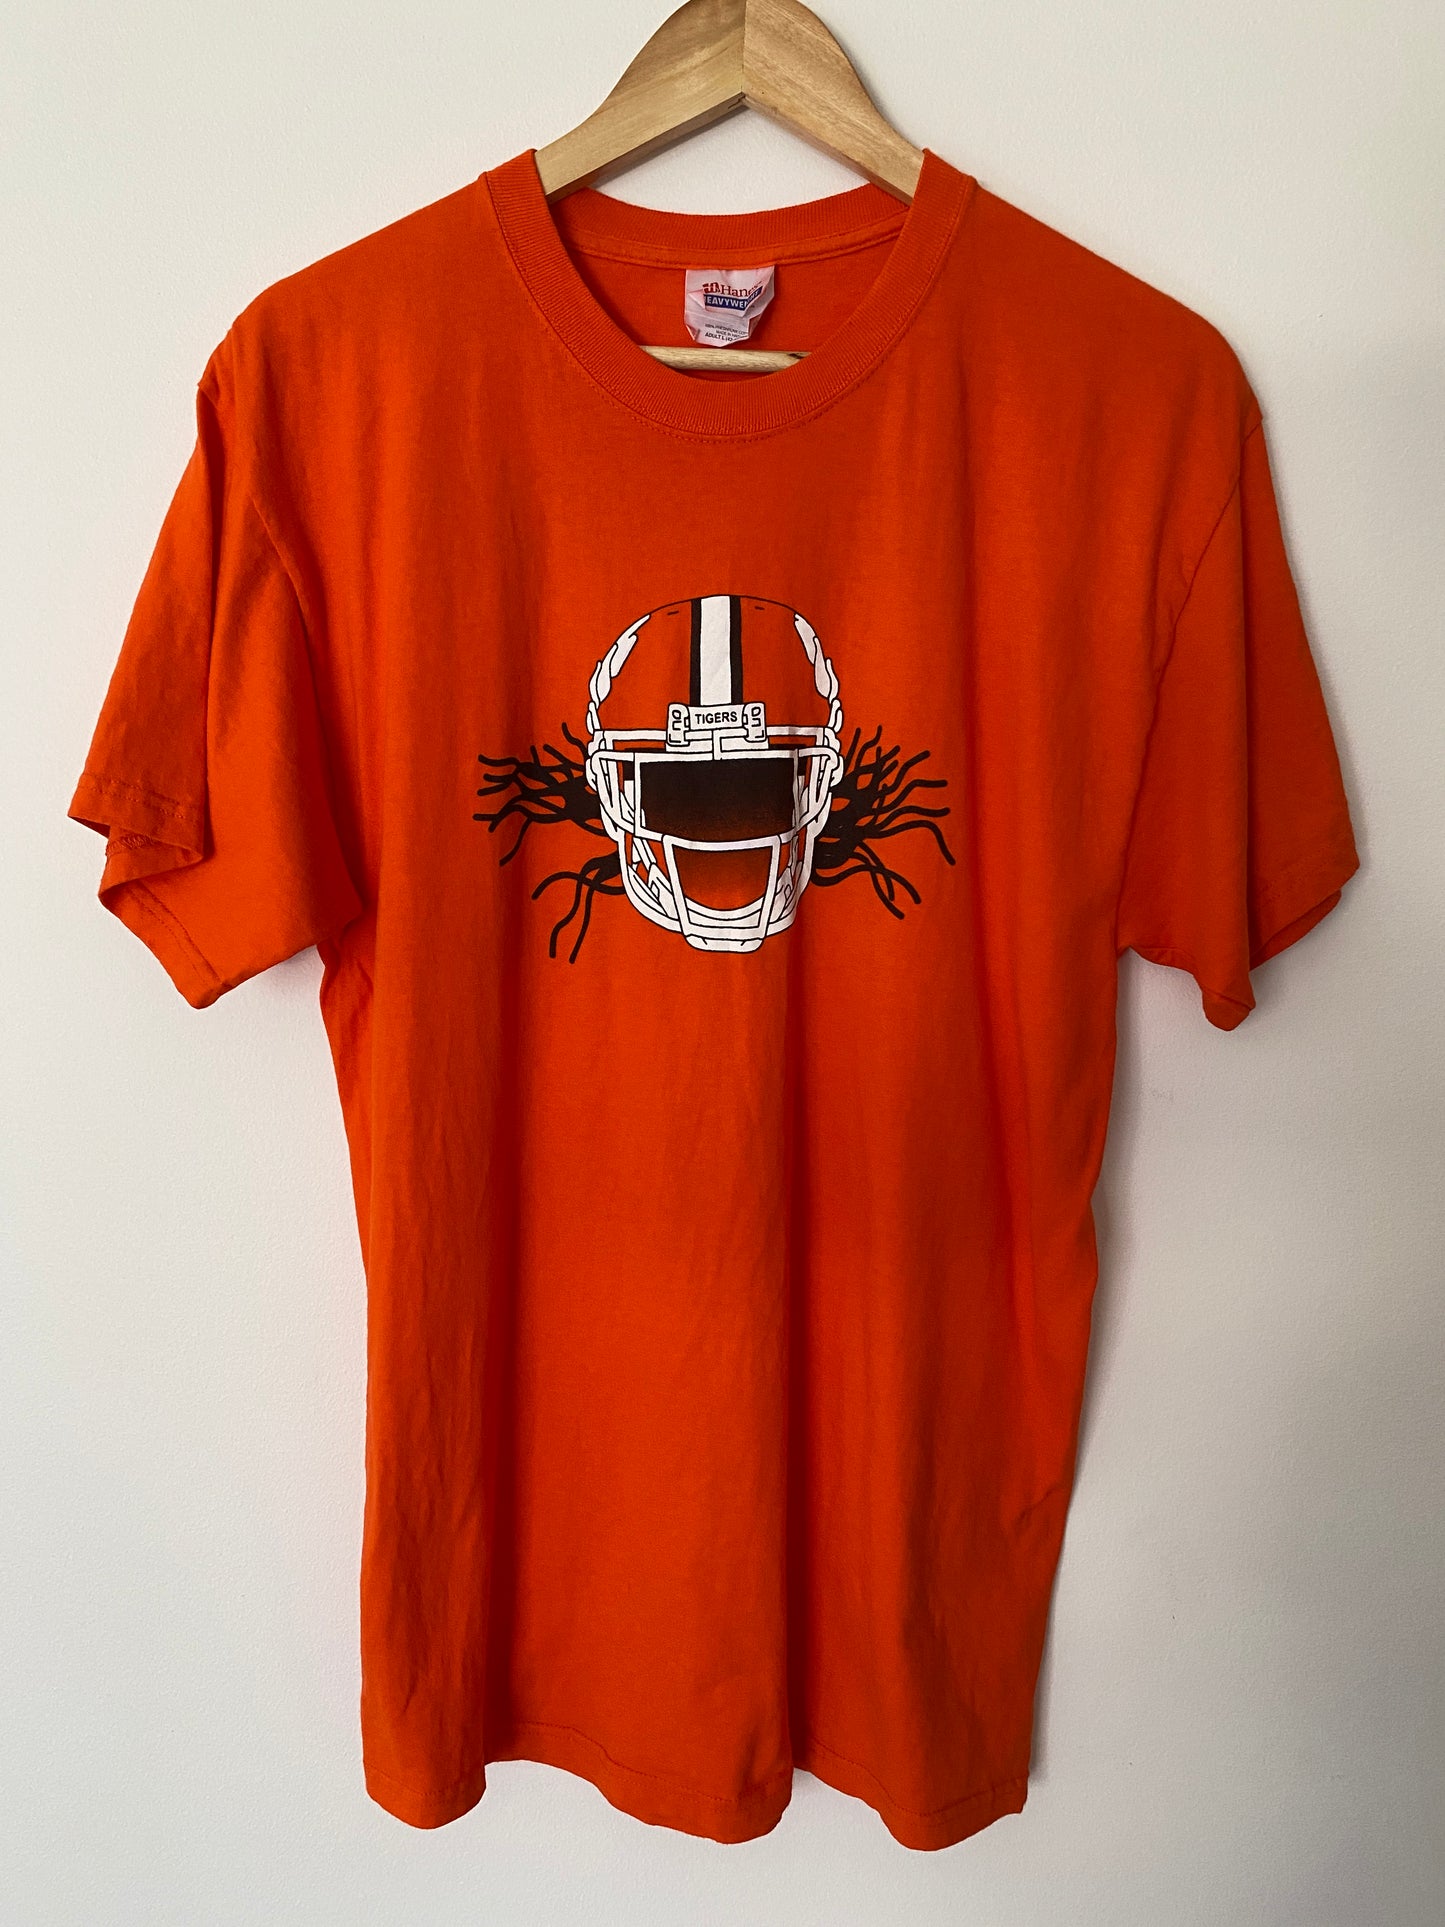 Clemson Tigers Football T-Shirt - L